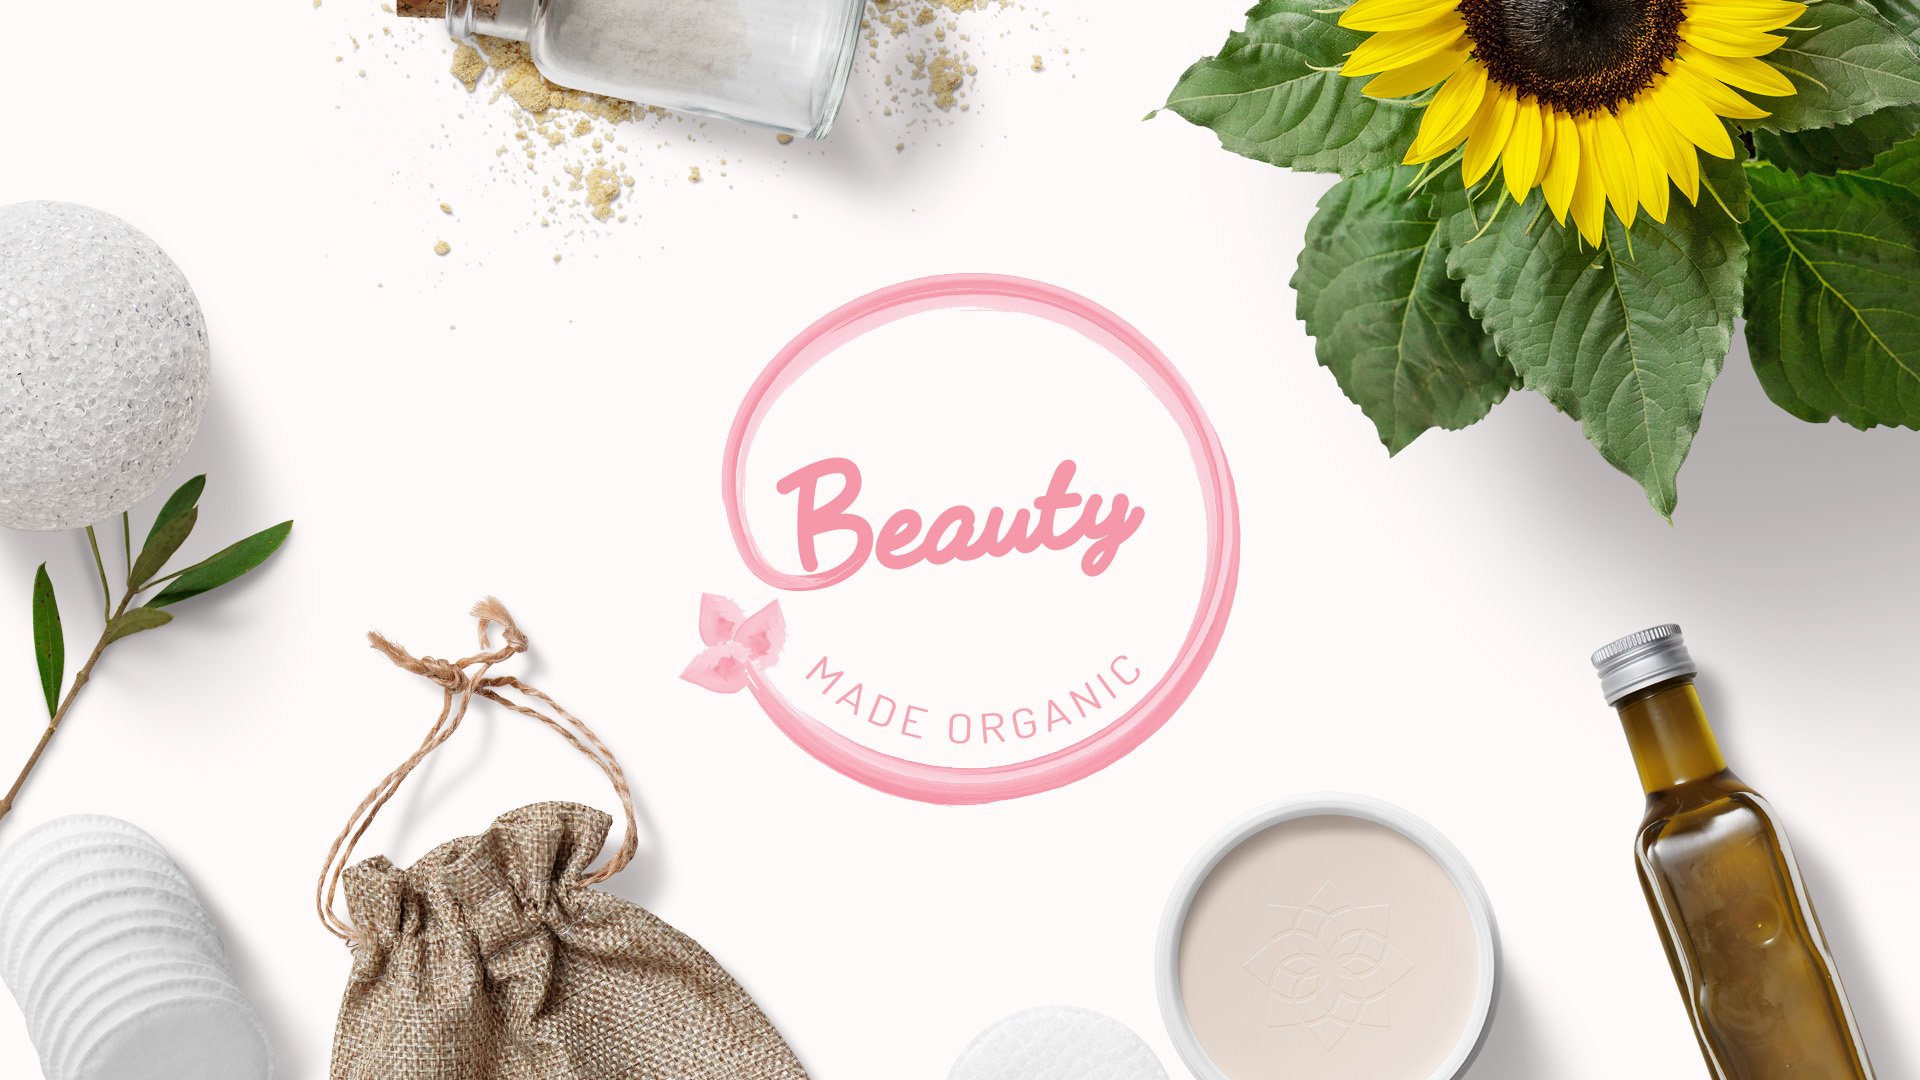 Beauty Made Organic